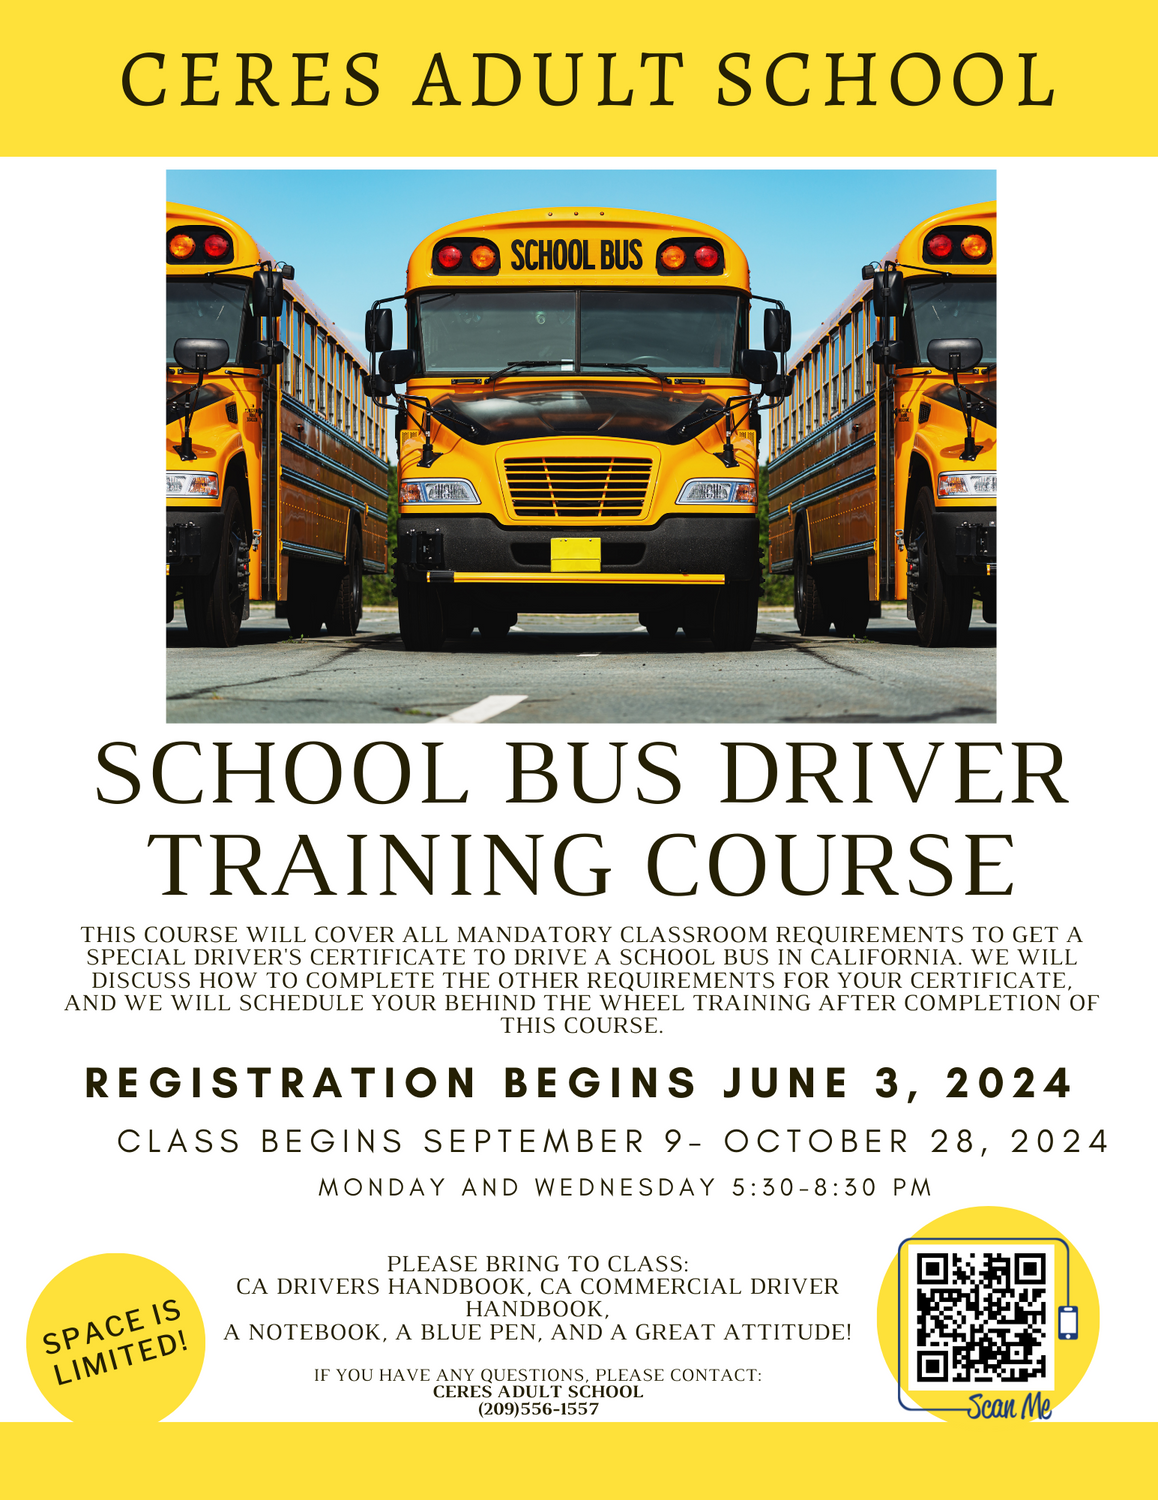 School bus driver training course